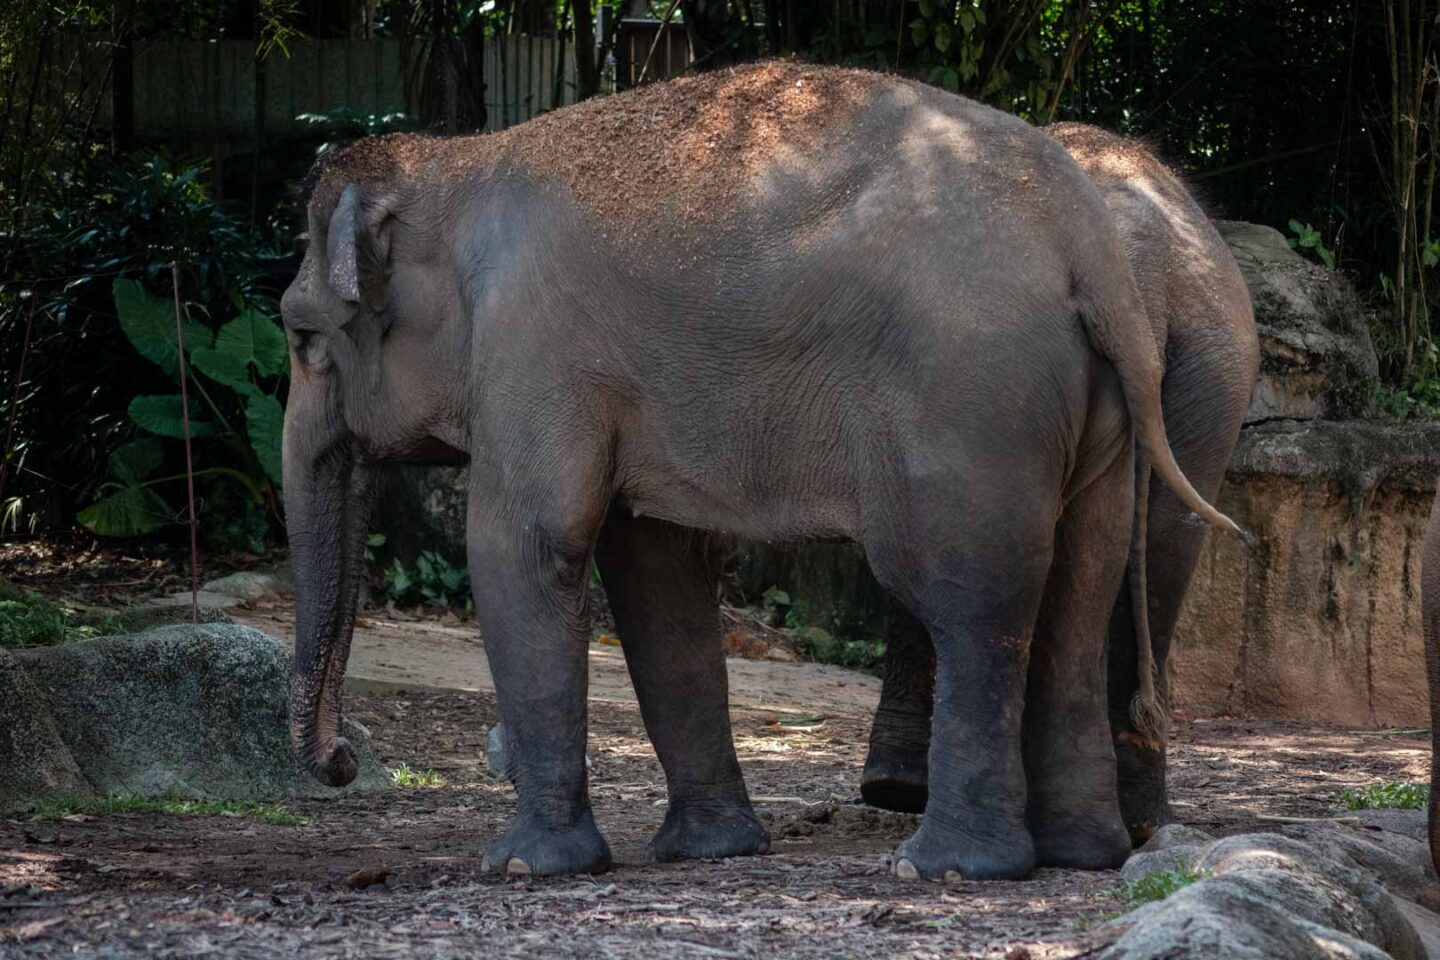 elephants of Asia, Singapore Zoo